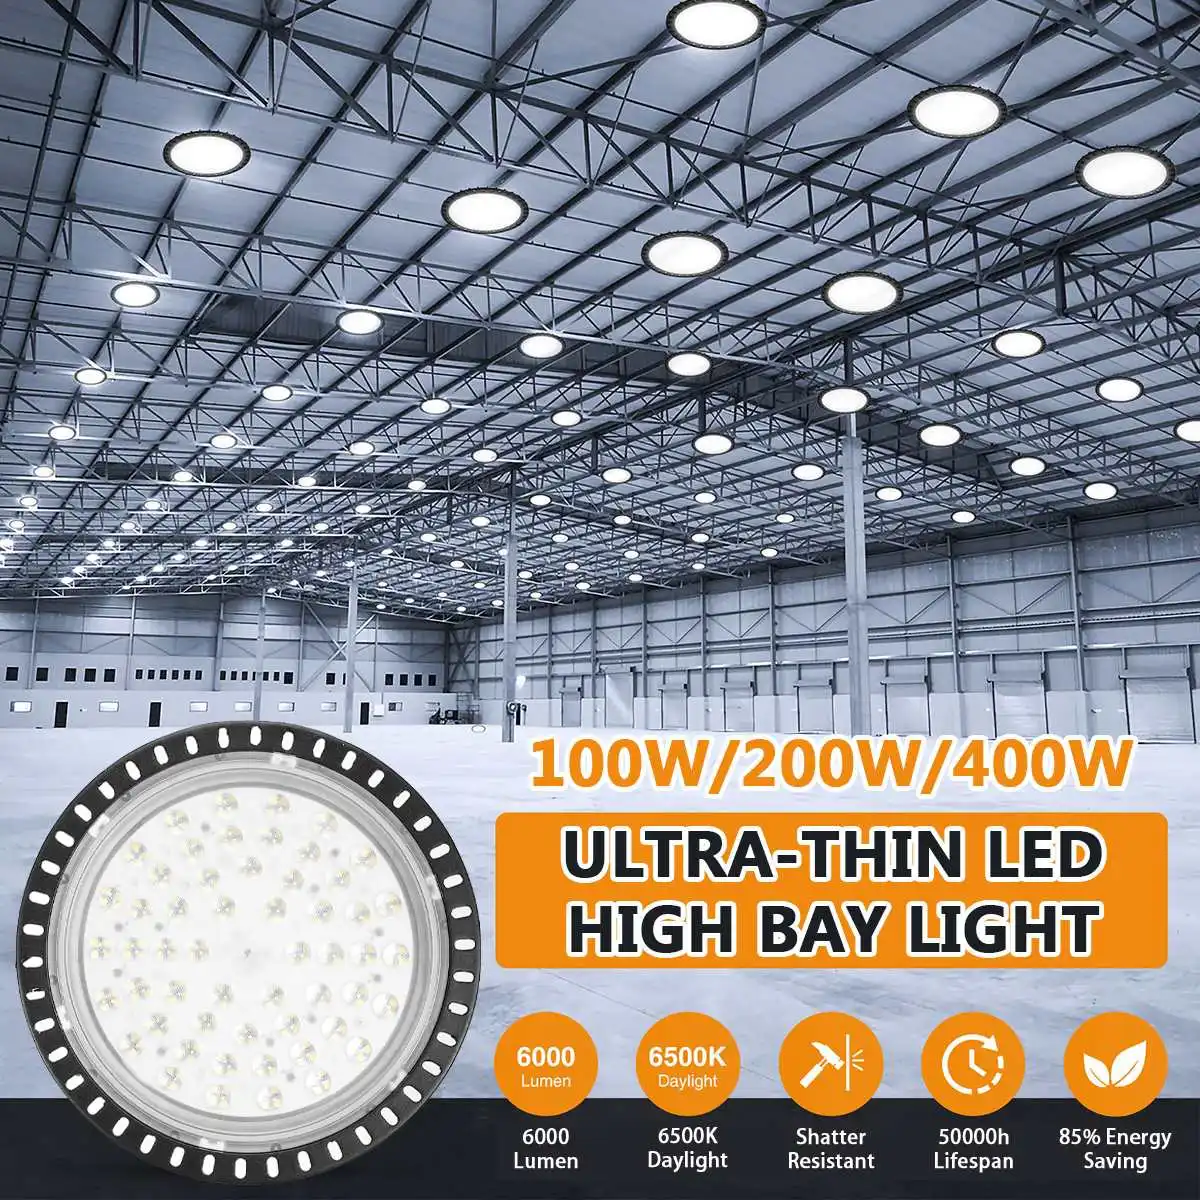 

100W/200W/400W Waterproof Led High Bay Light Garage UFO Lamp Industrial Light Warehouse Workshop Stadium Market Airport Fixture